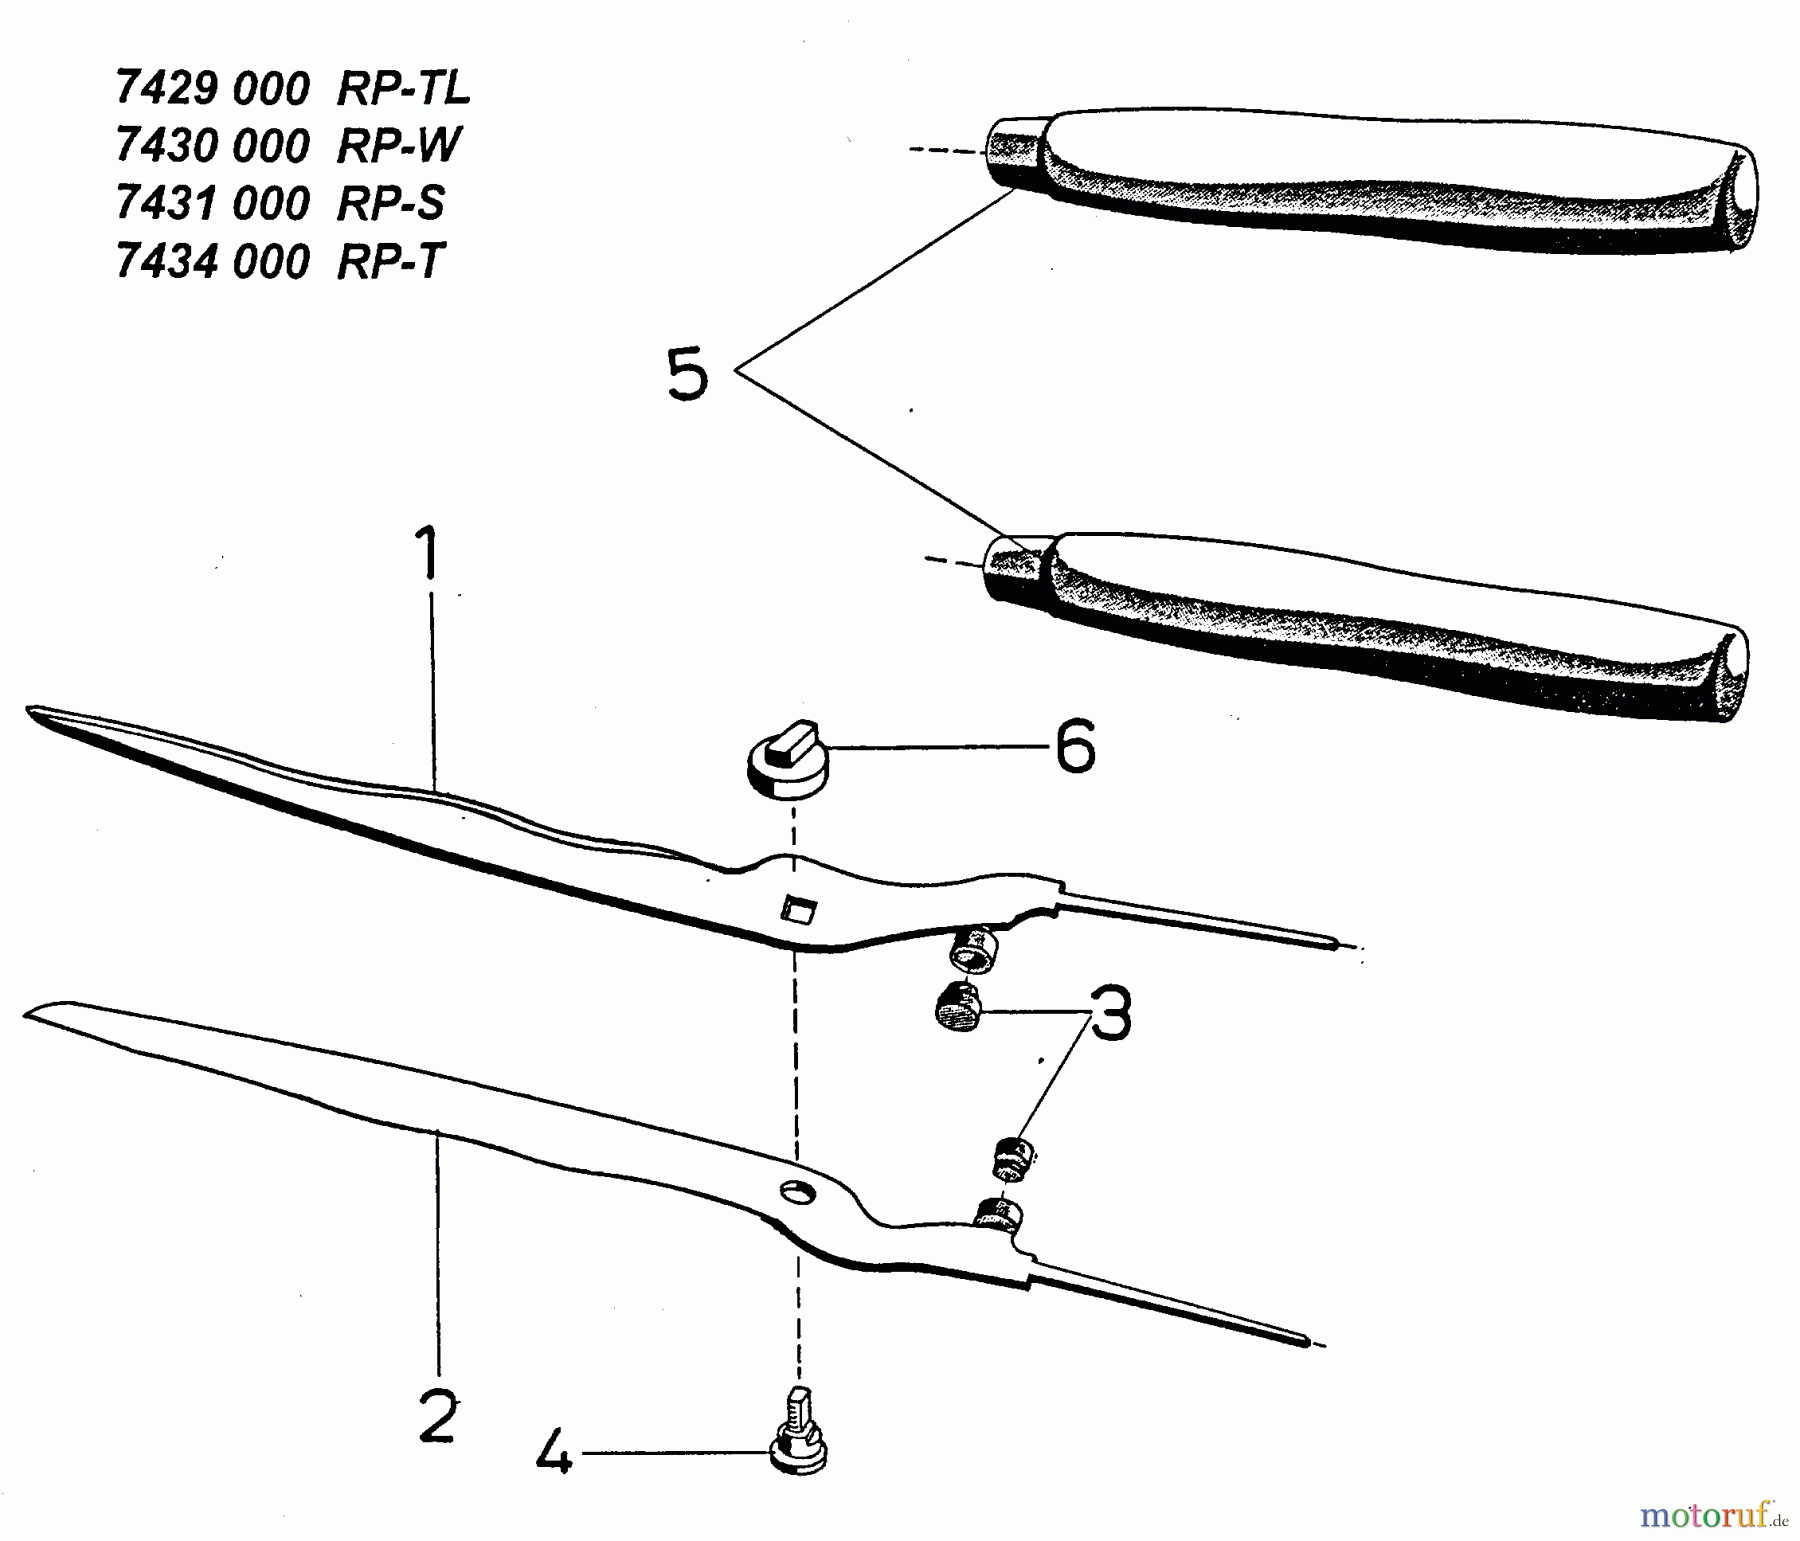  Wolf-Garten Hedge shears manually operated RP-S 7431000  (1998) Basic machine